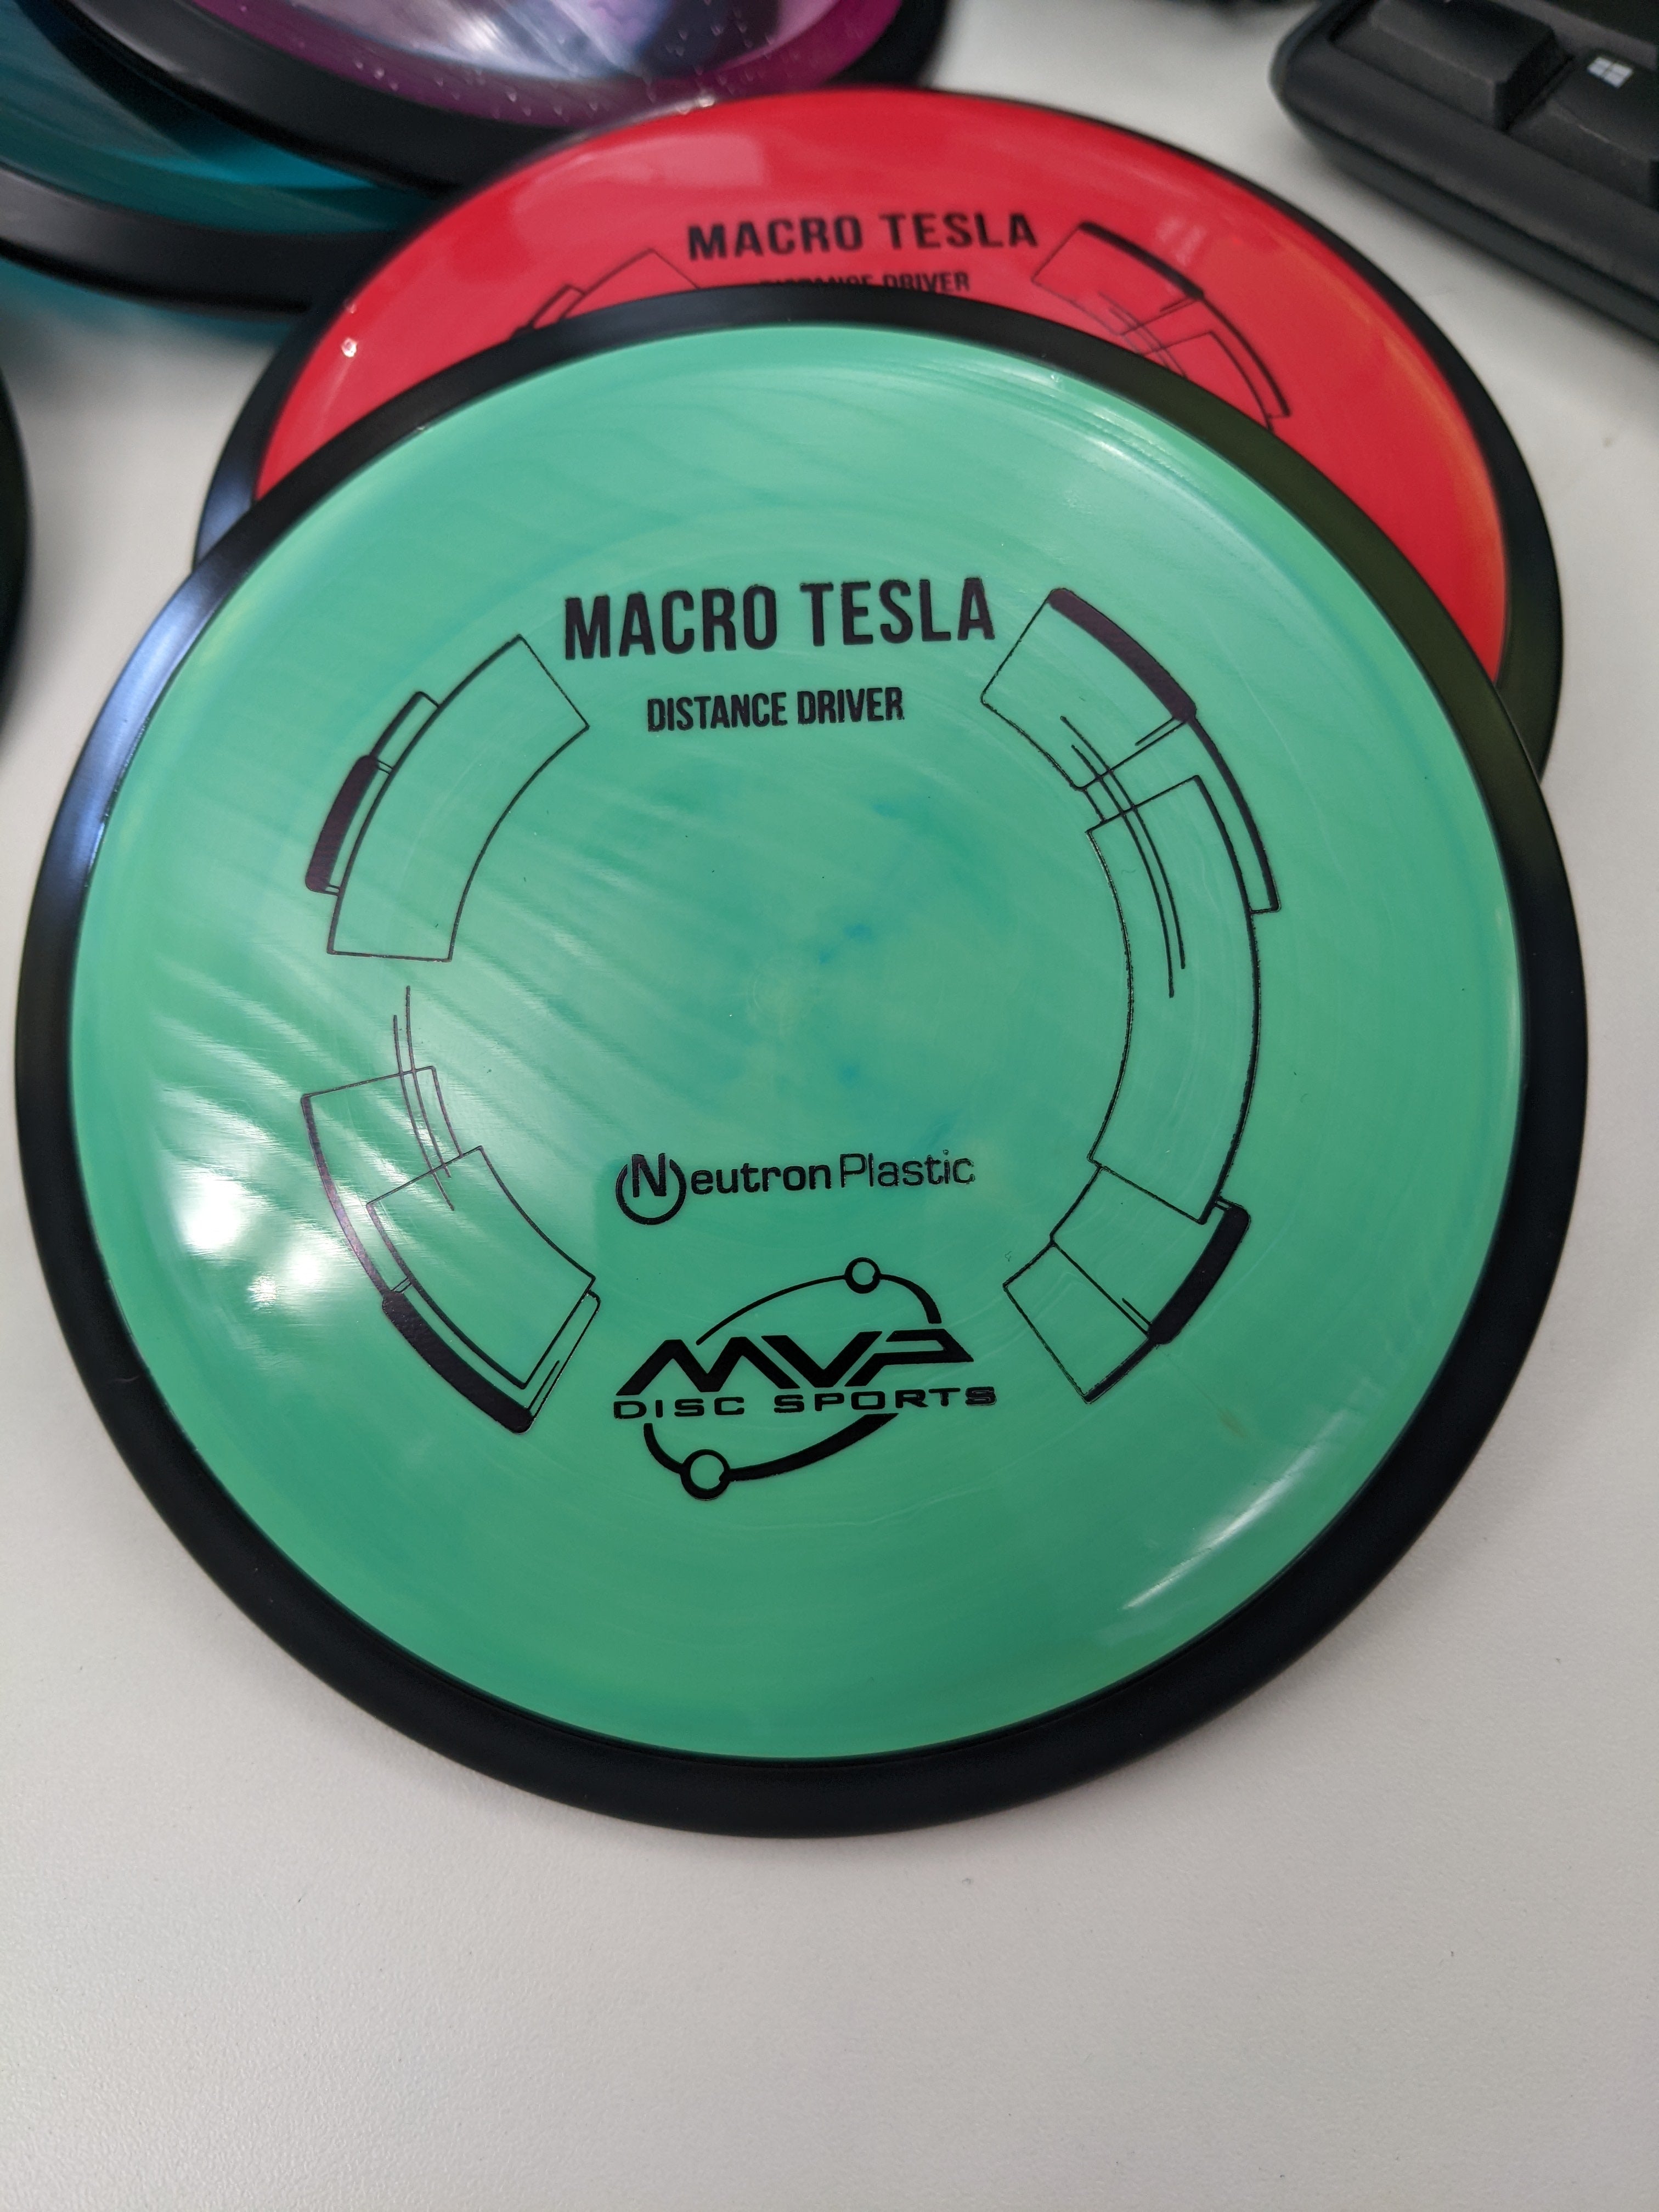 MVP Macro Tesla Neutron Mini